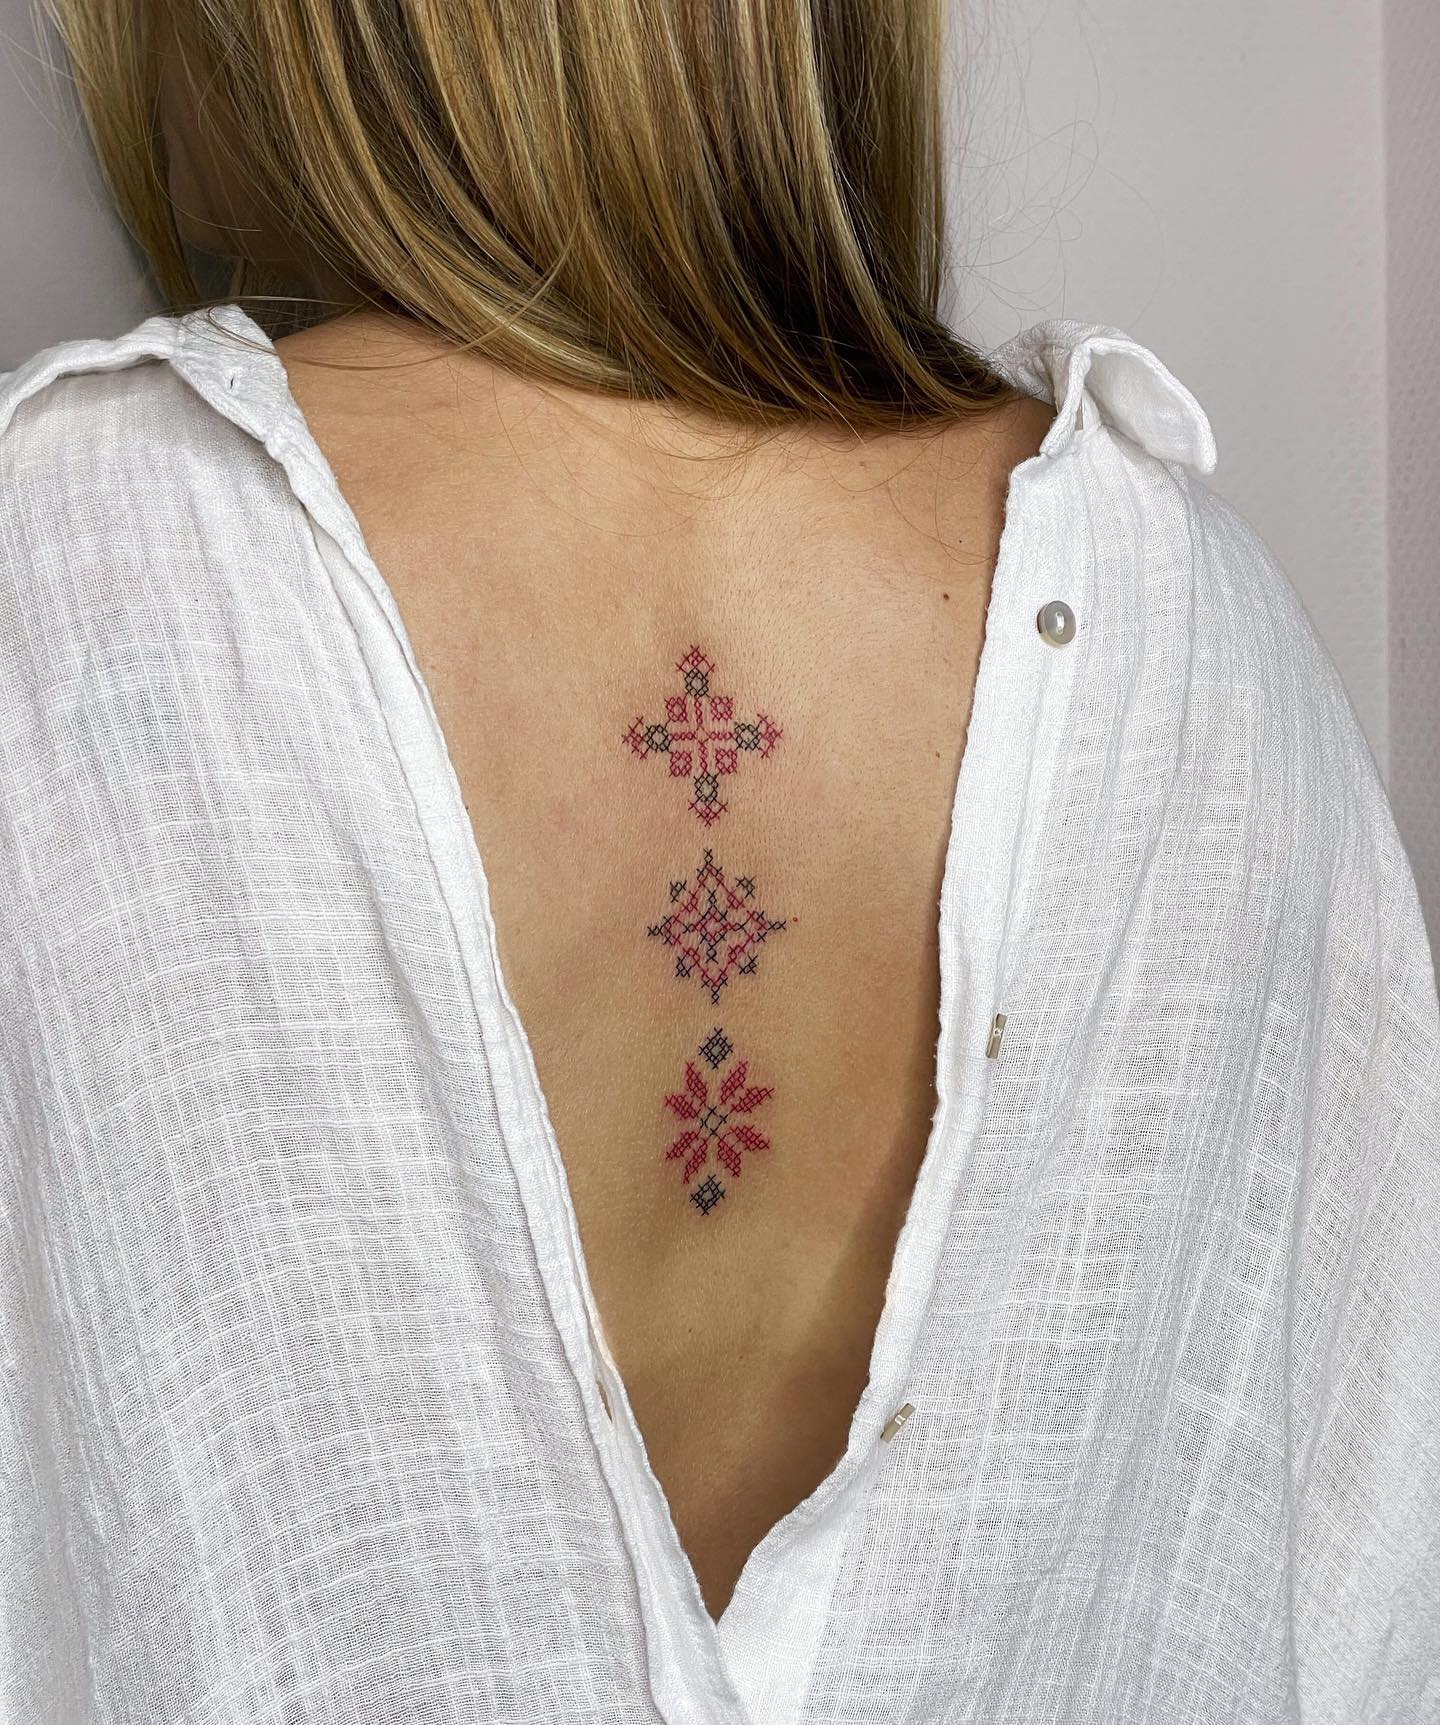 Ukrainian cross embroidery tattoo on back